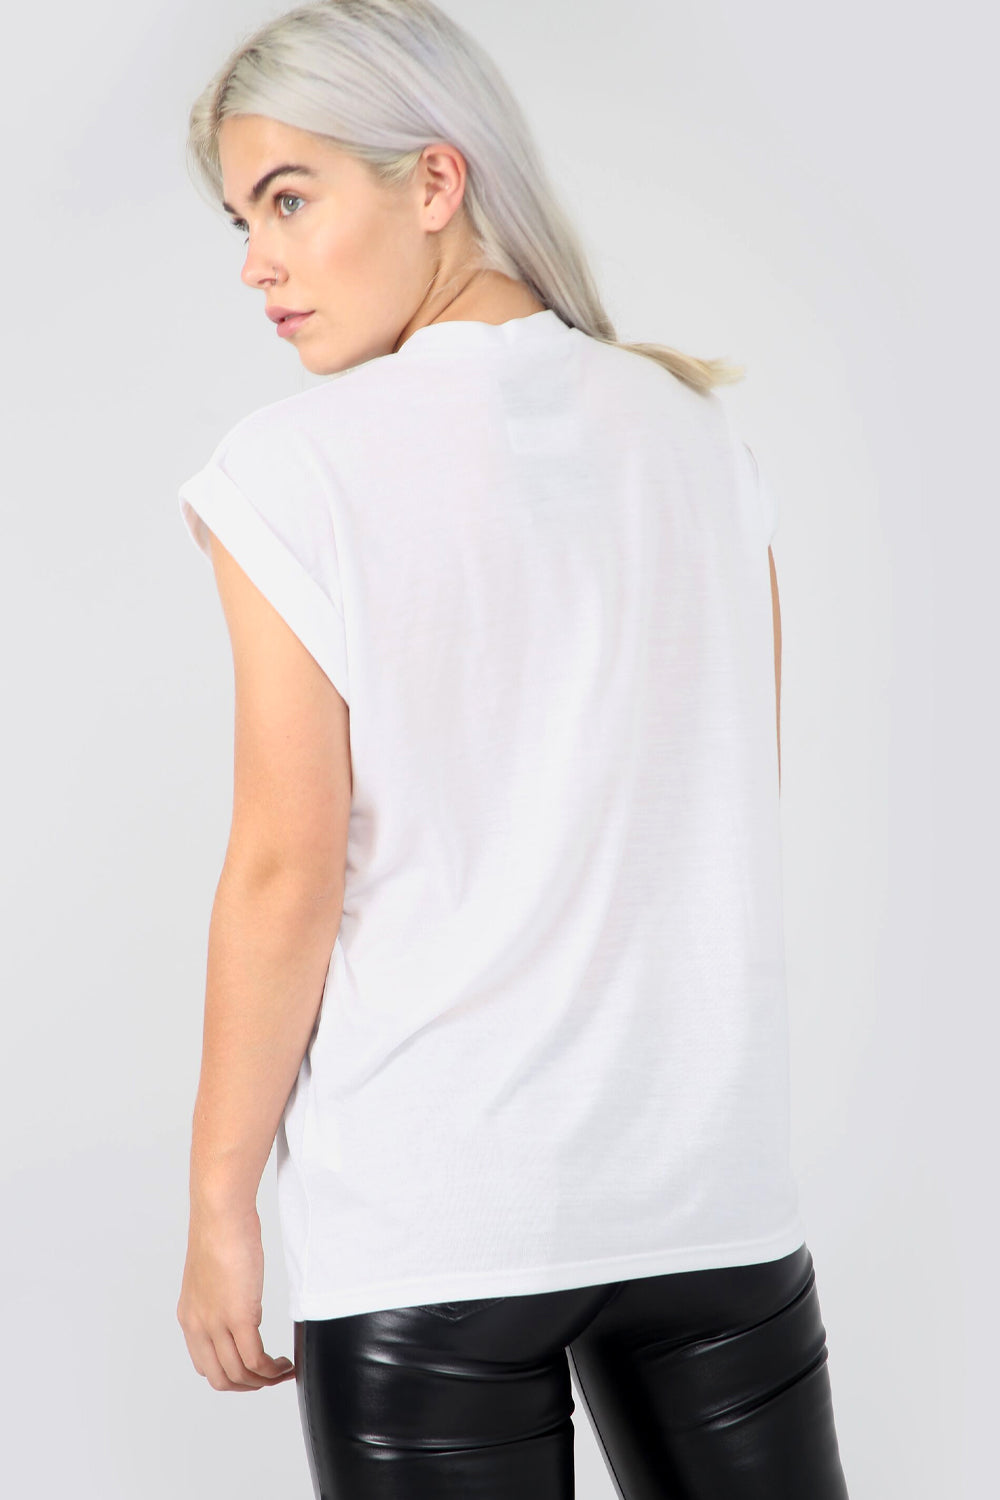 La Femme Graphic Print Roll Sleeve Basic Tshirt - bejealous-com